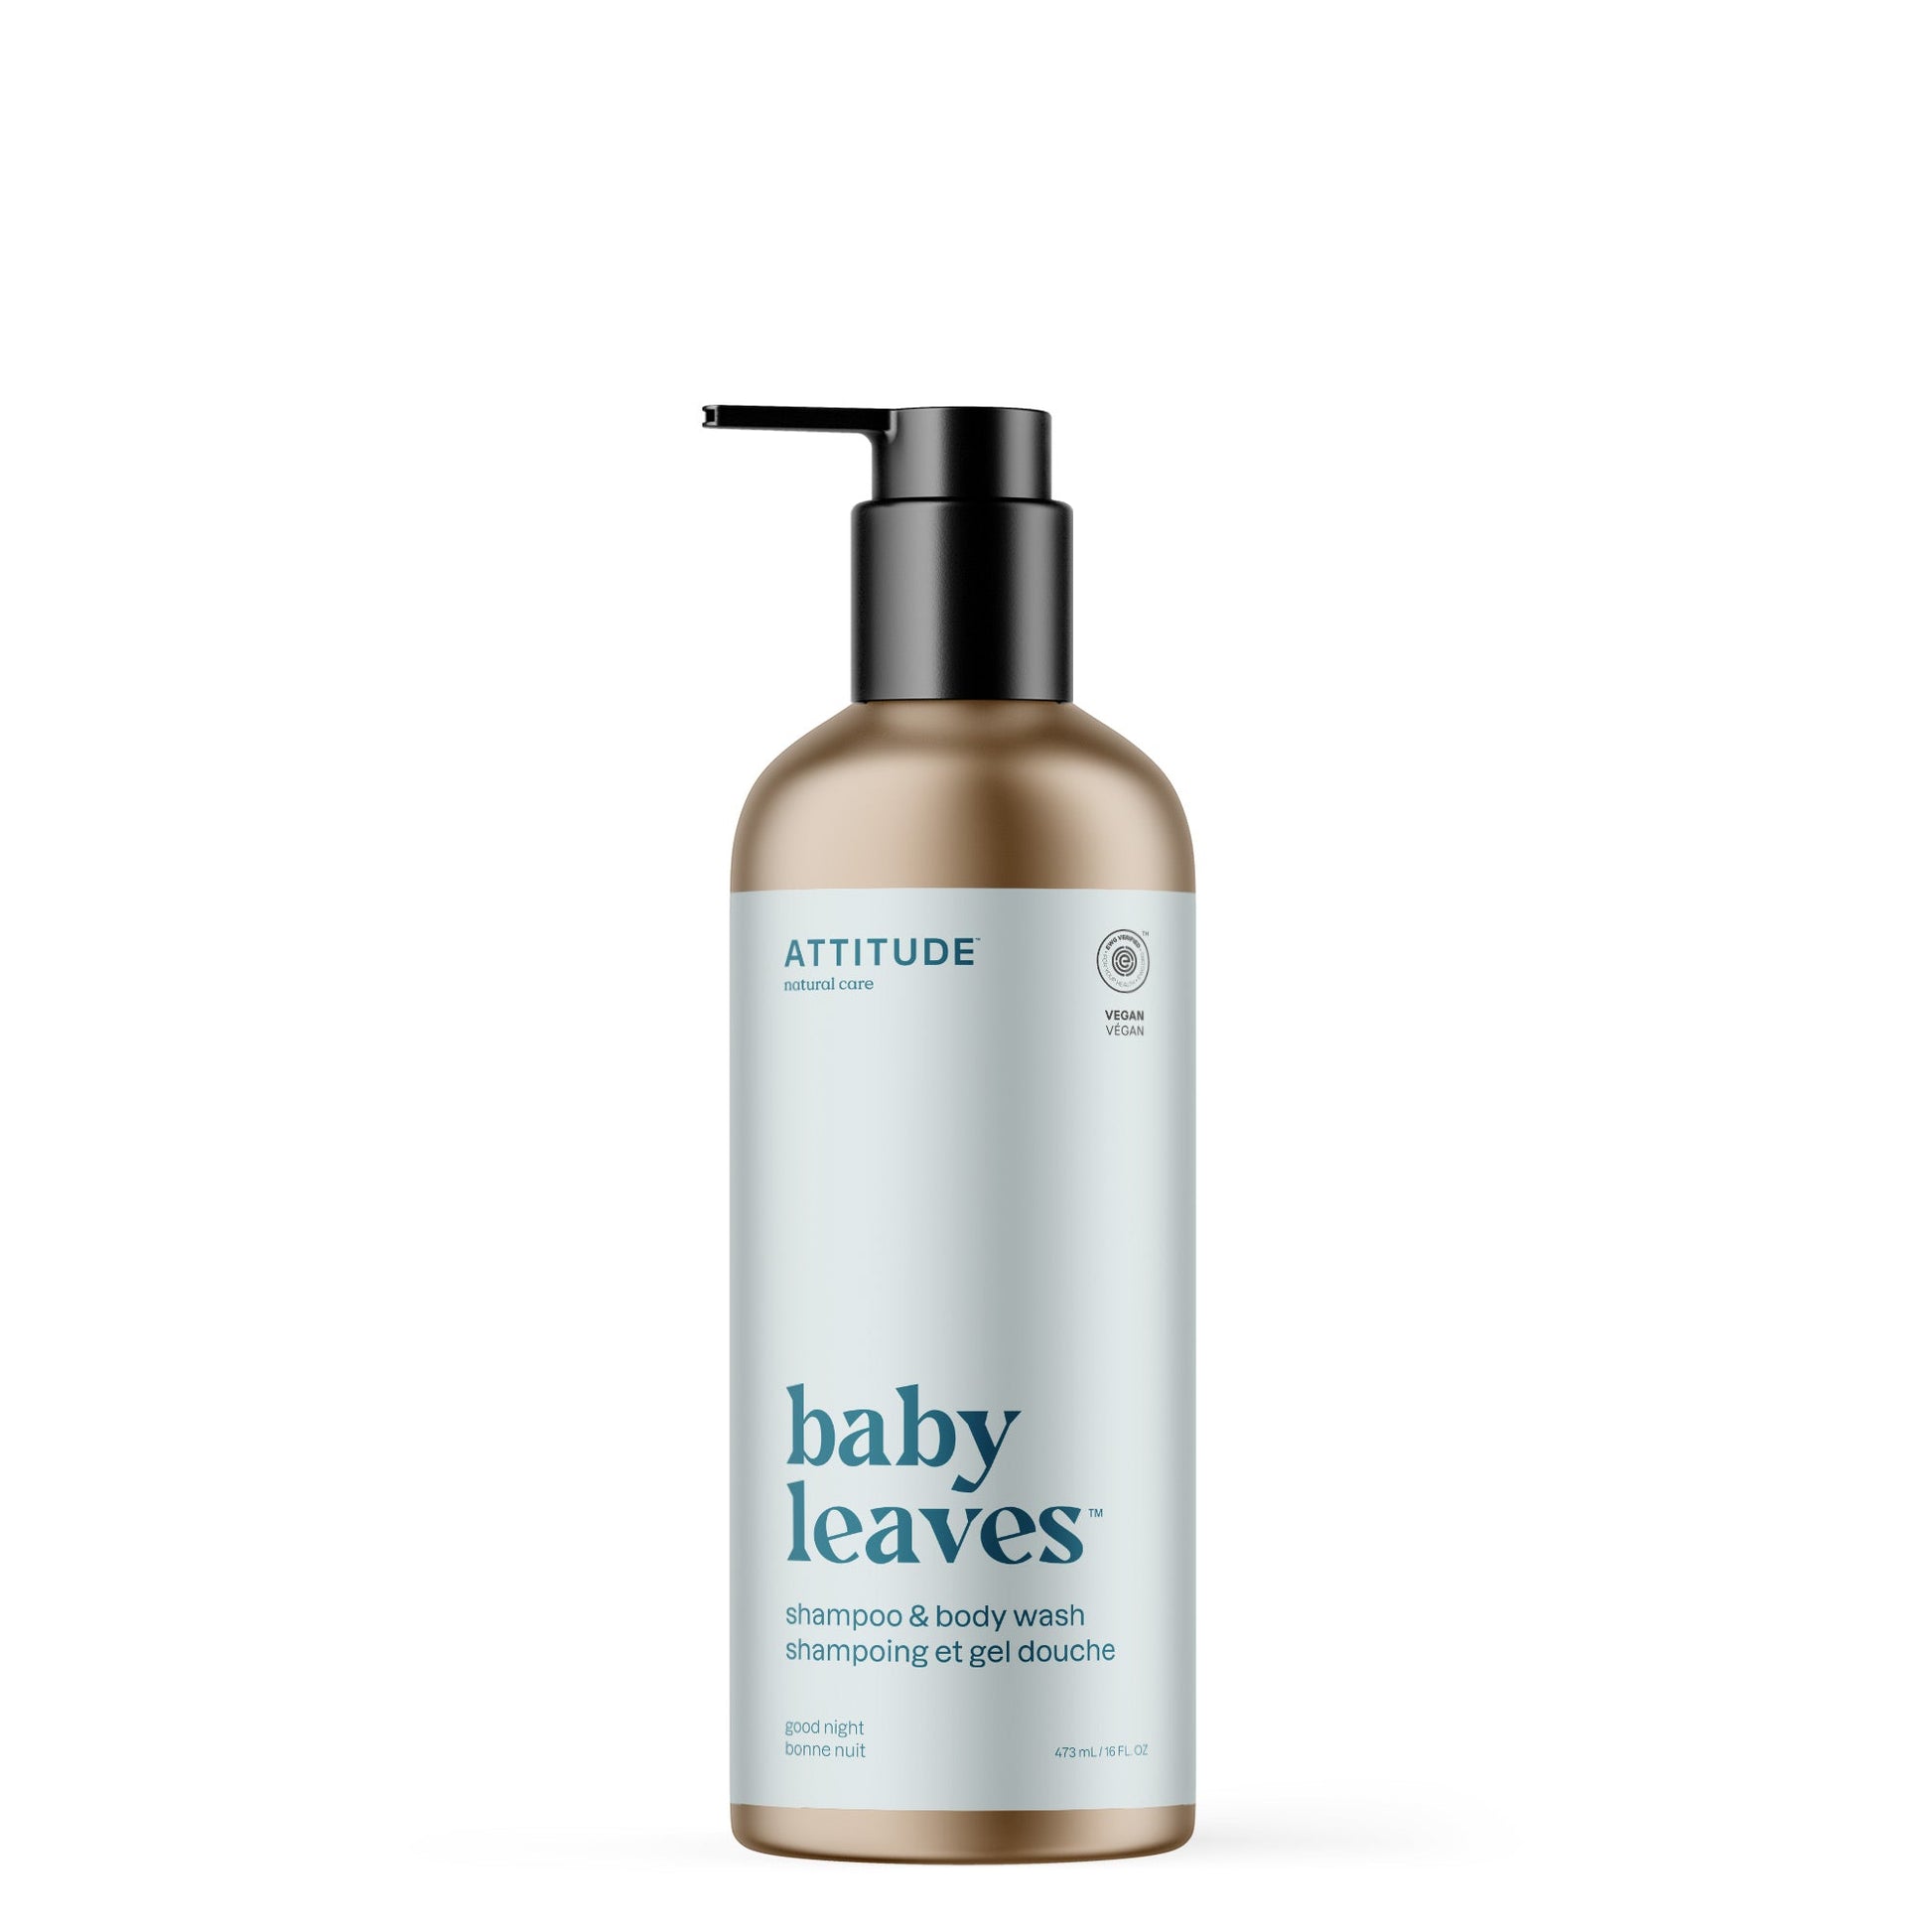 ATTITUDE Baby Leaves Aluminum shampoo body wash Good Night 19613-btob_en?_main? 473mL